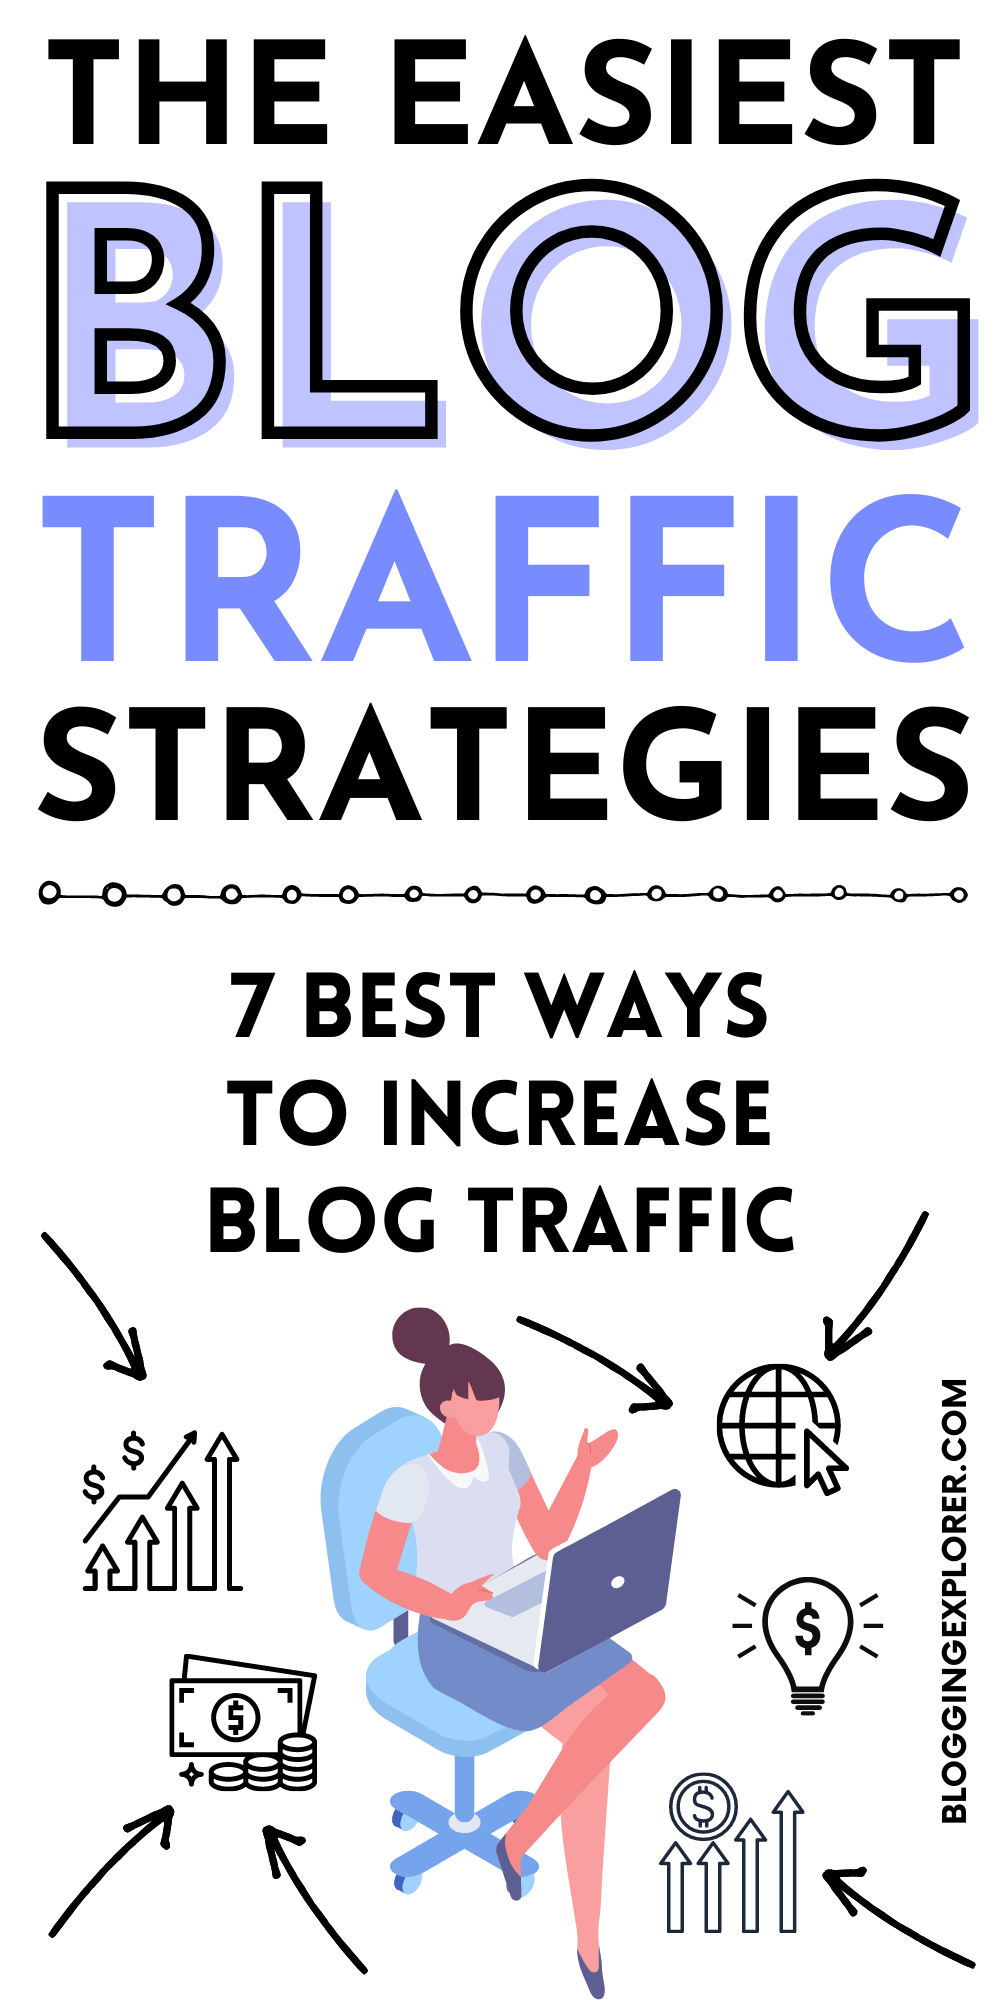 The easiest blog traffic strategies to increase blog traffic